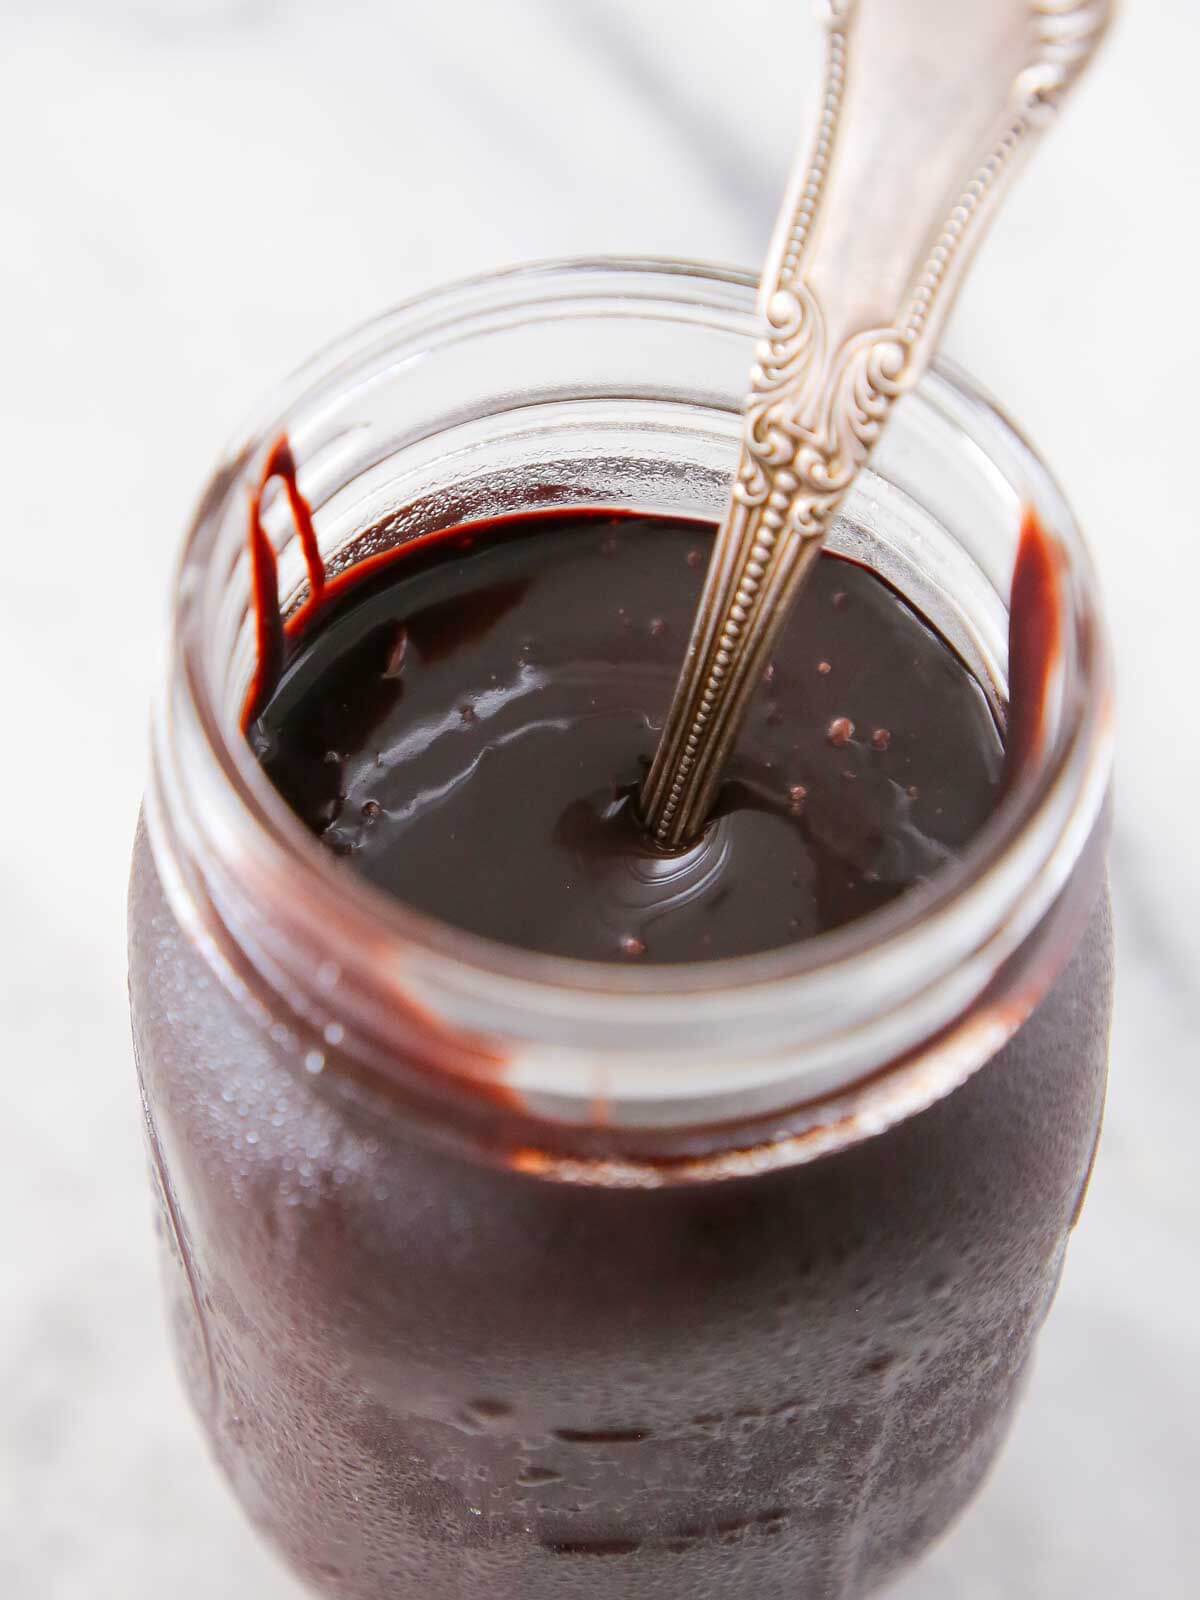 chocolate fudge sauce in jar with spoon.